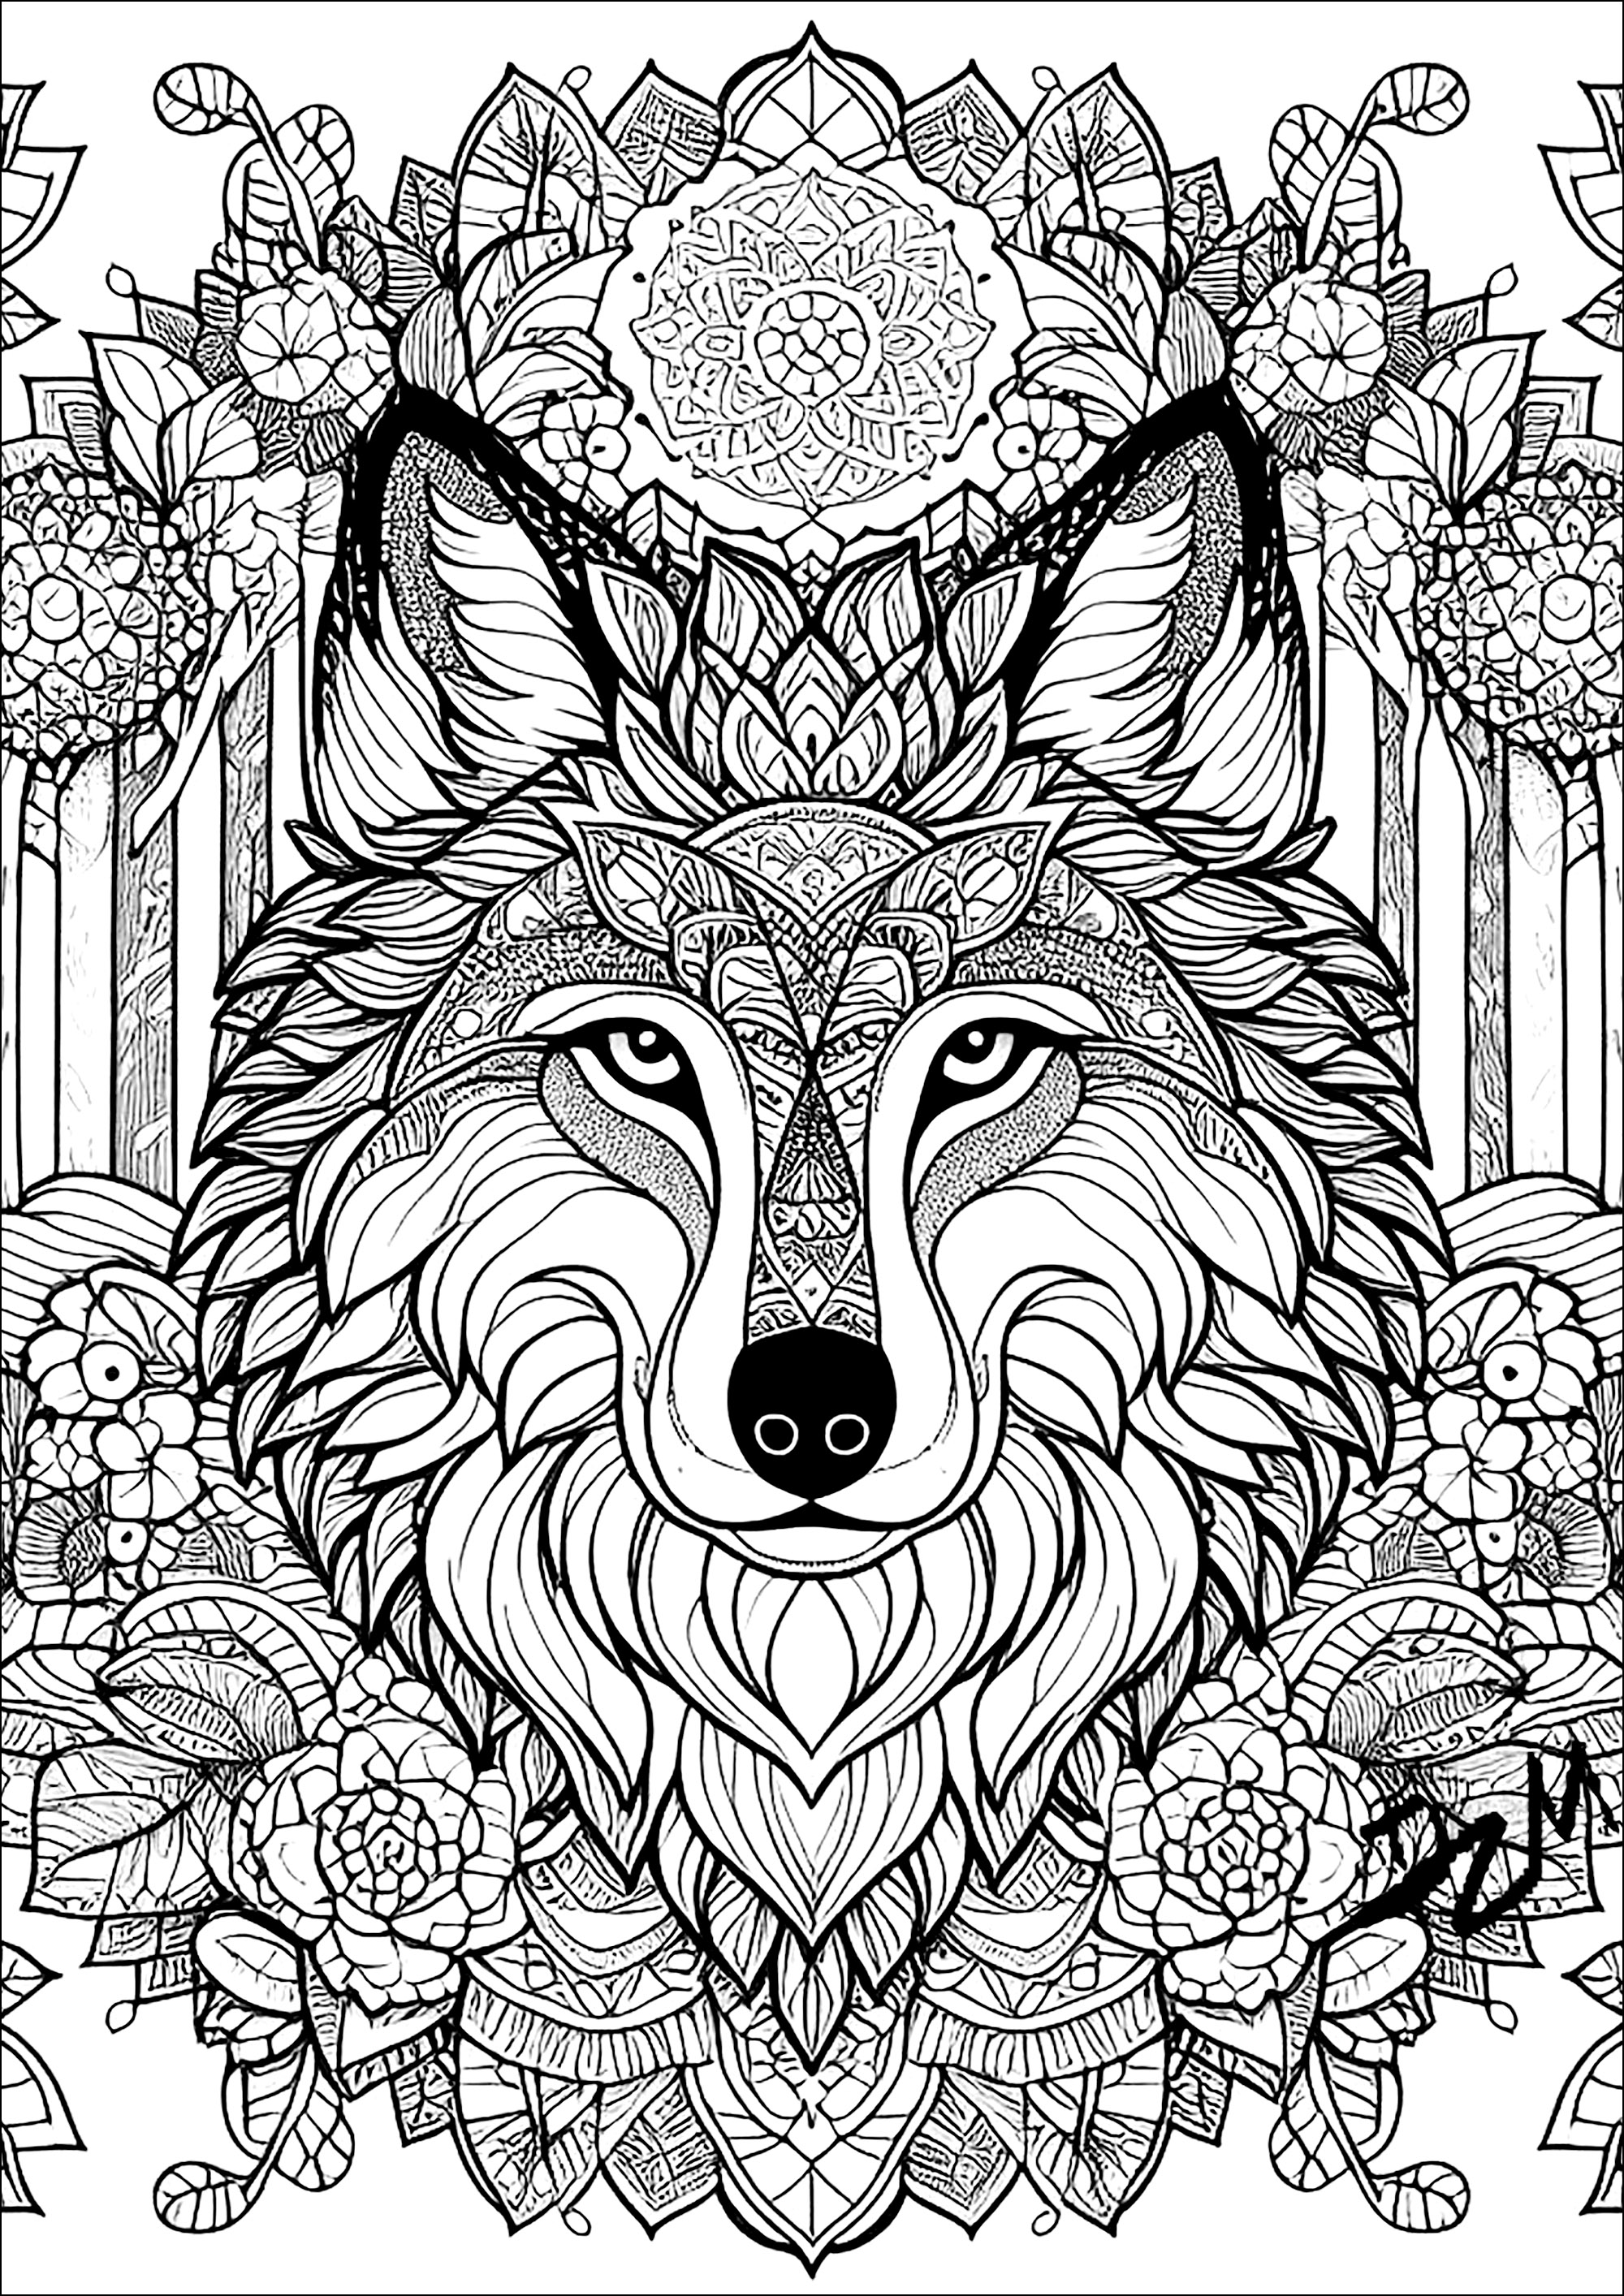 Loup et mandalas, Artiste : Domandalas